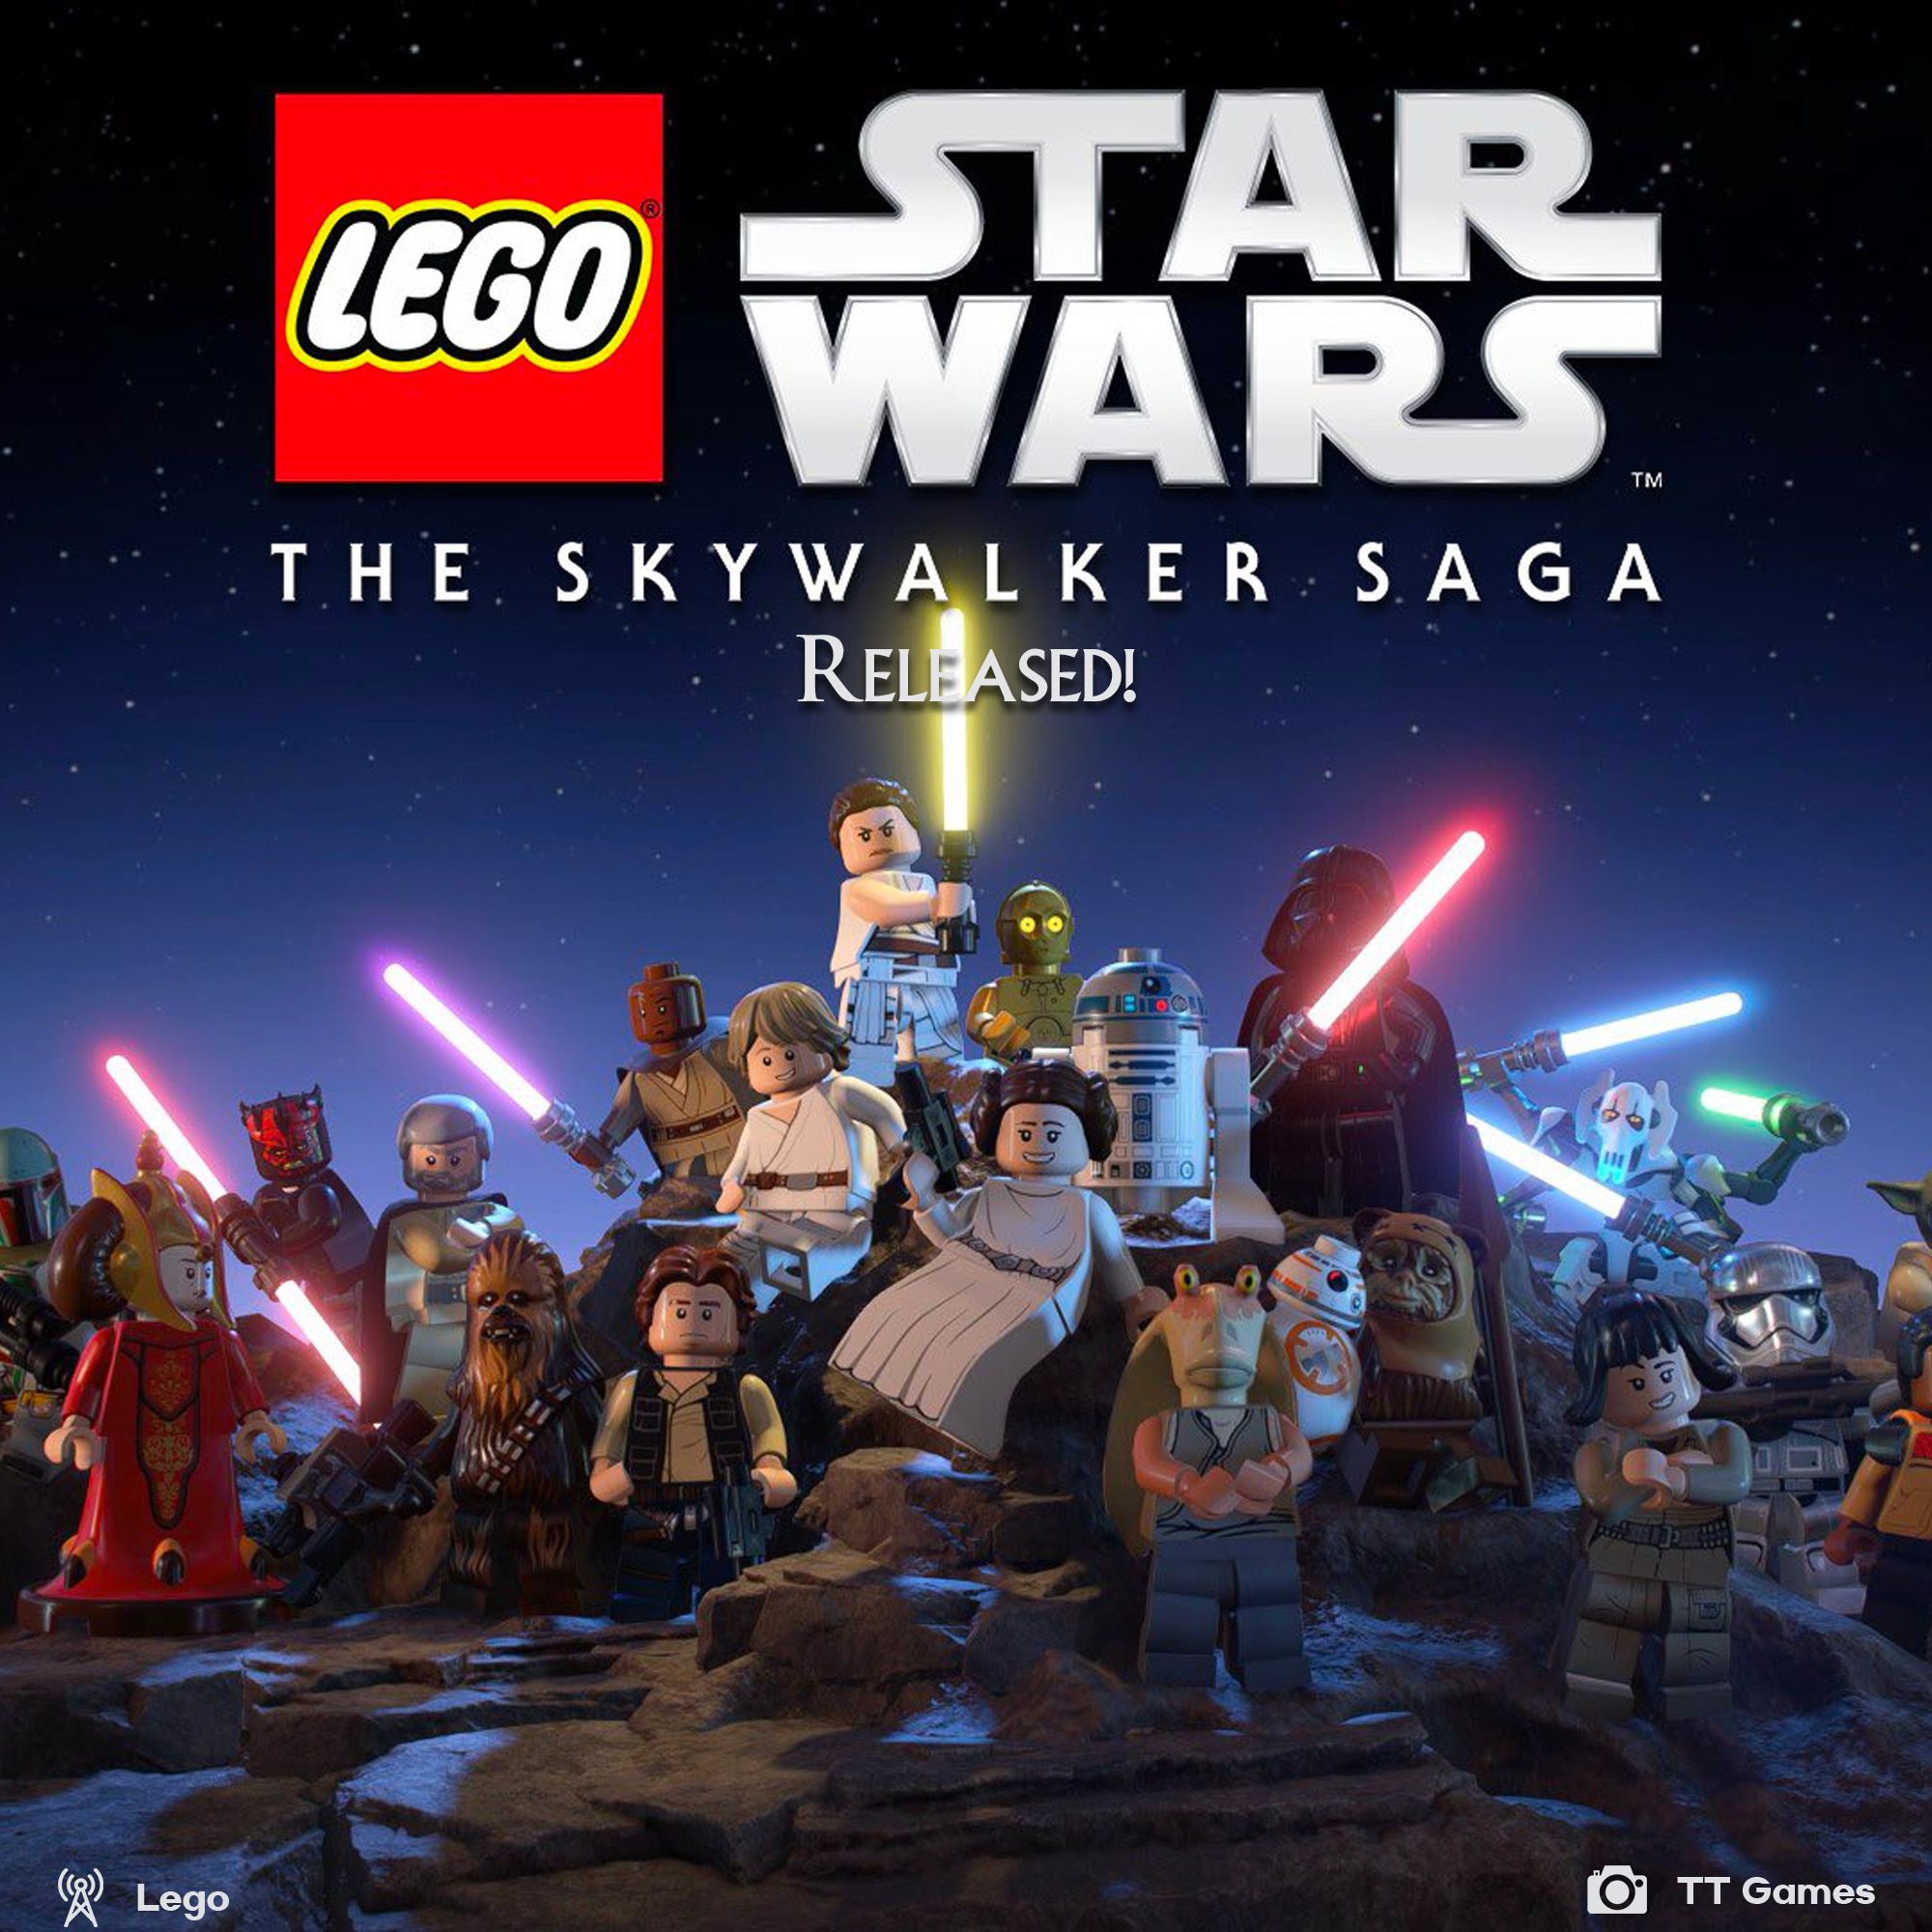 Lego Star Wars The Skywalker Saga finally released